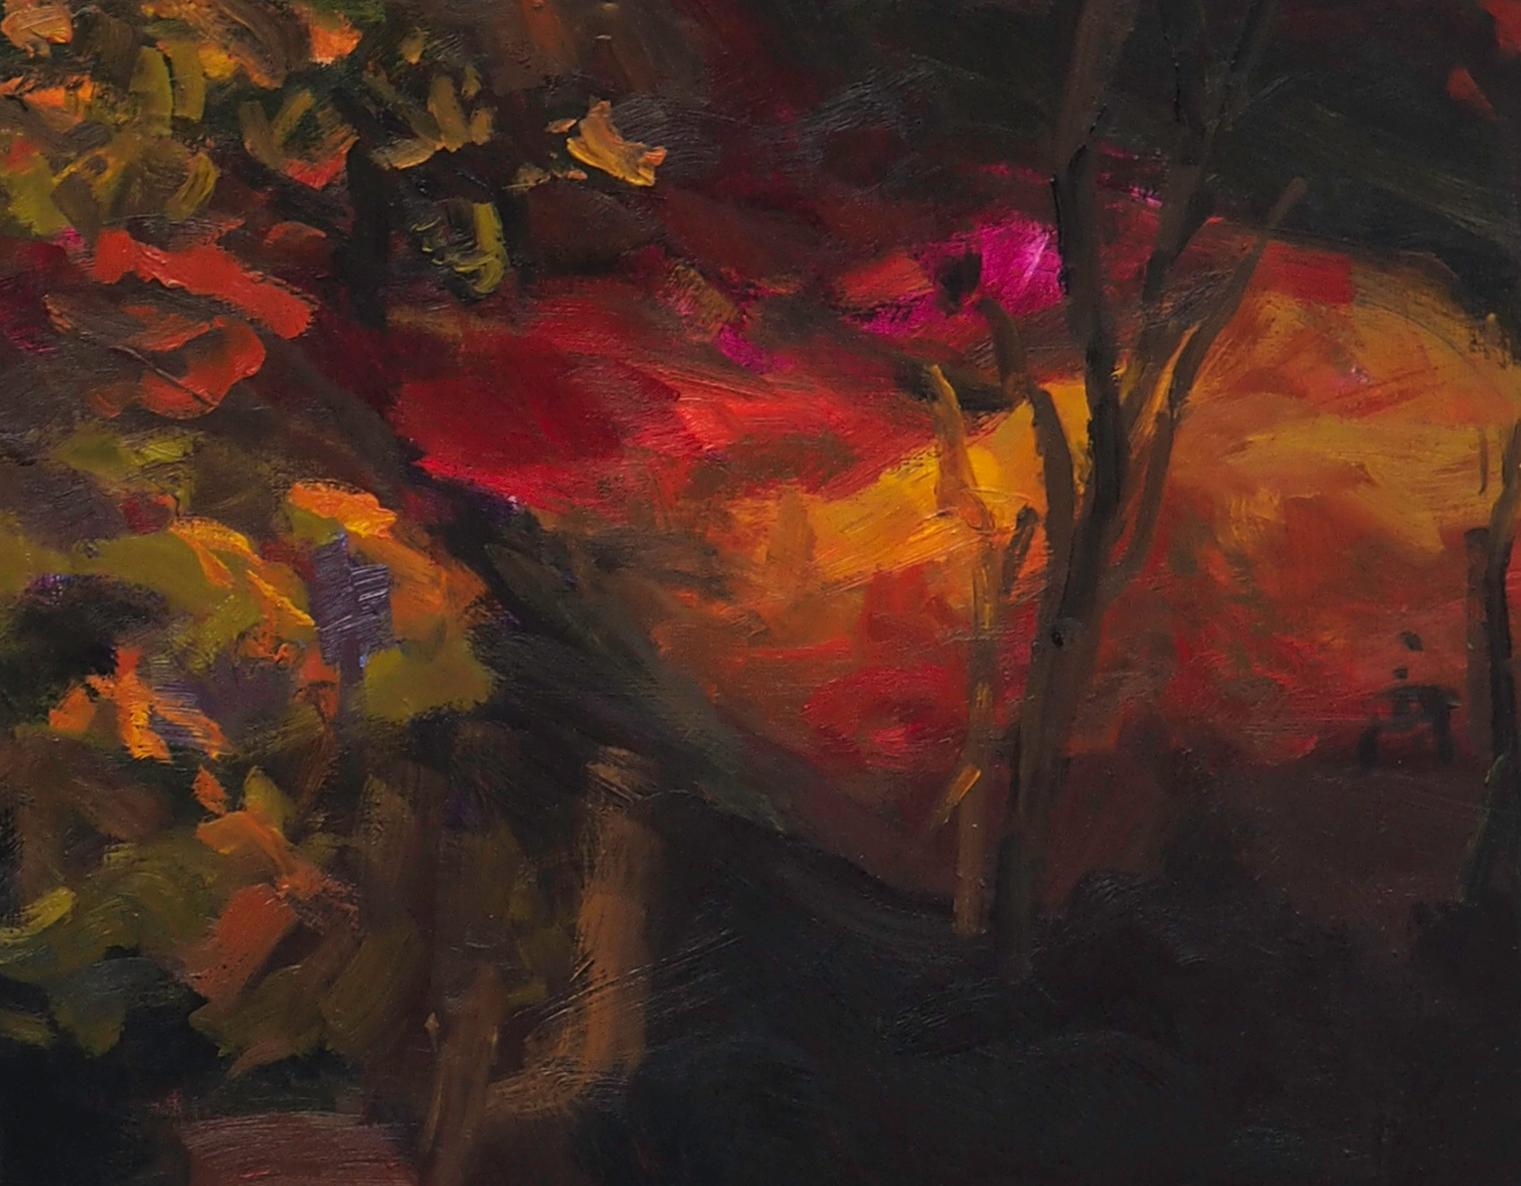 Nightlight II, Original Contemporary Abstract Impressionist Landscape Painting, 2018
55